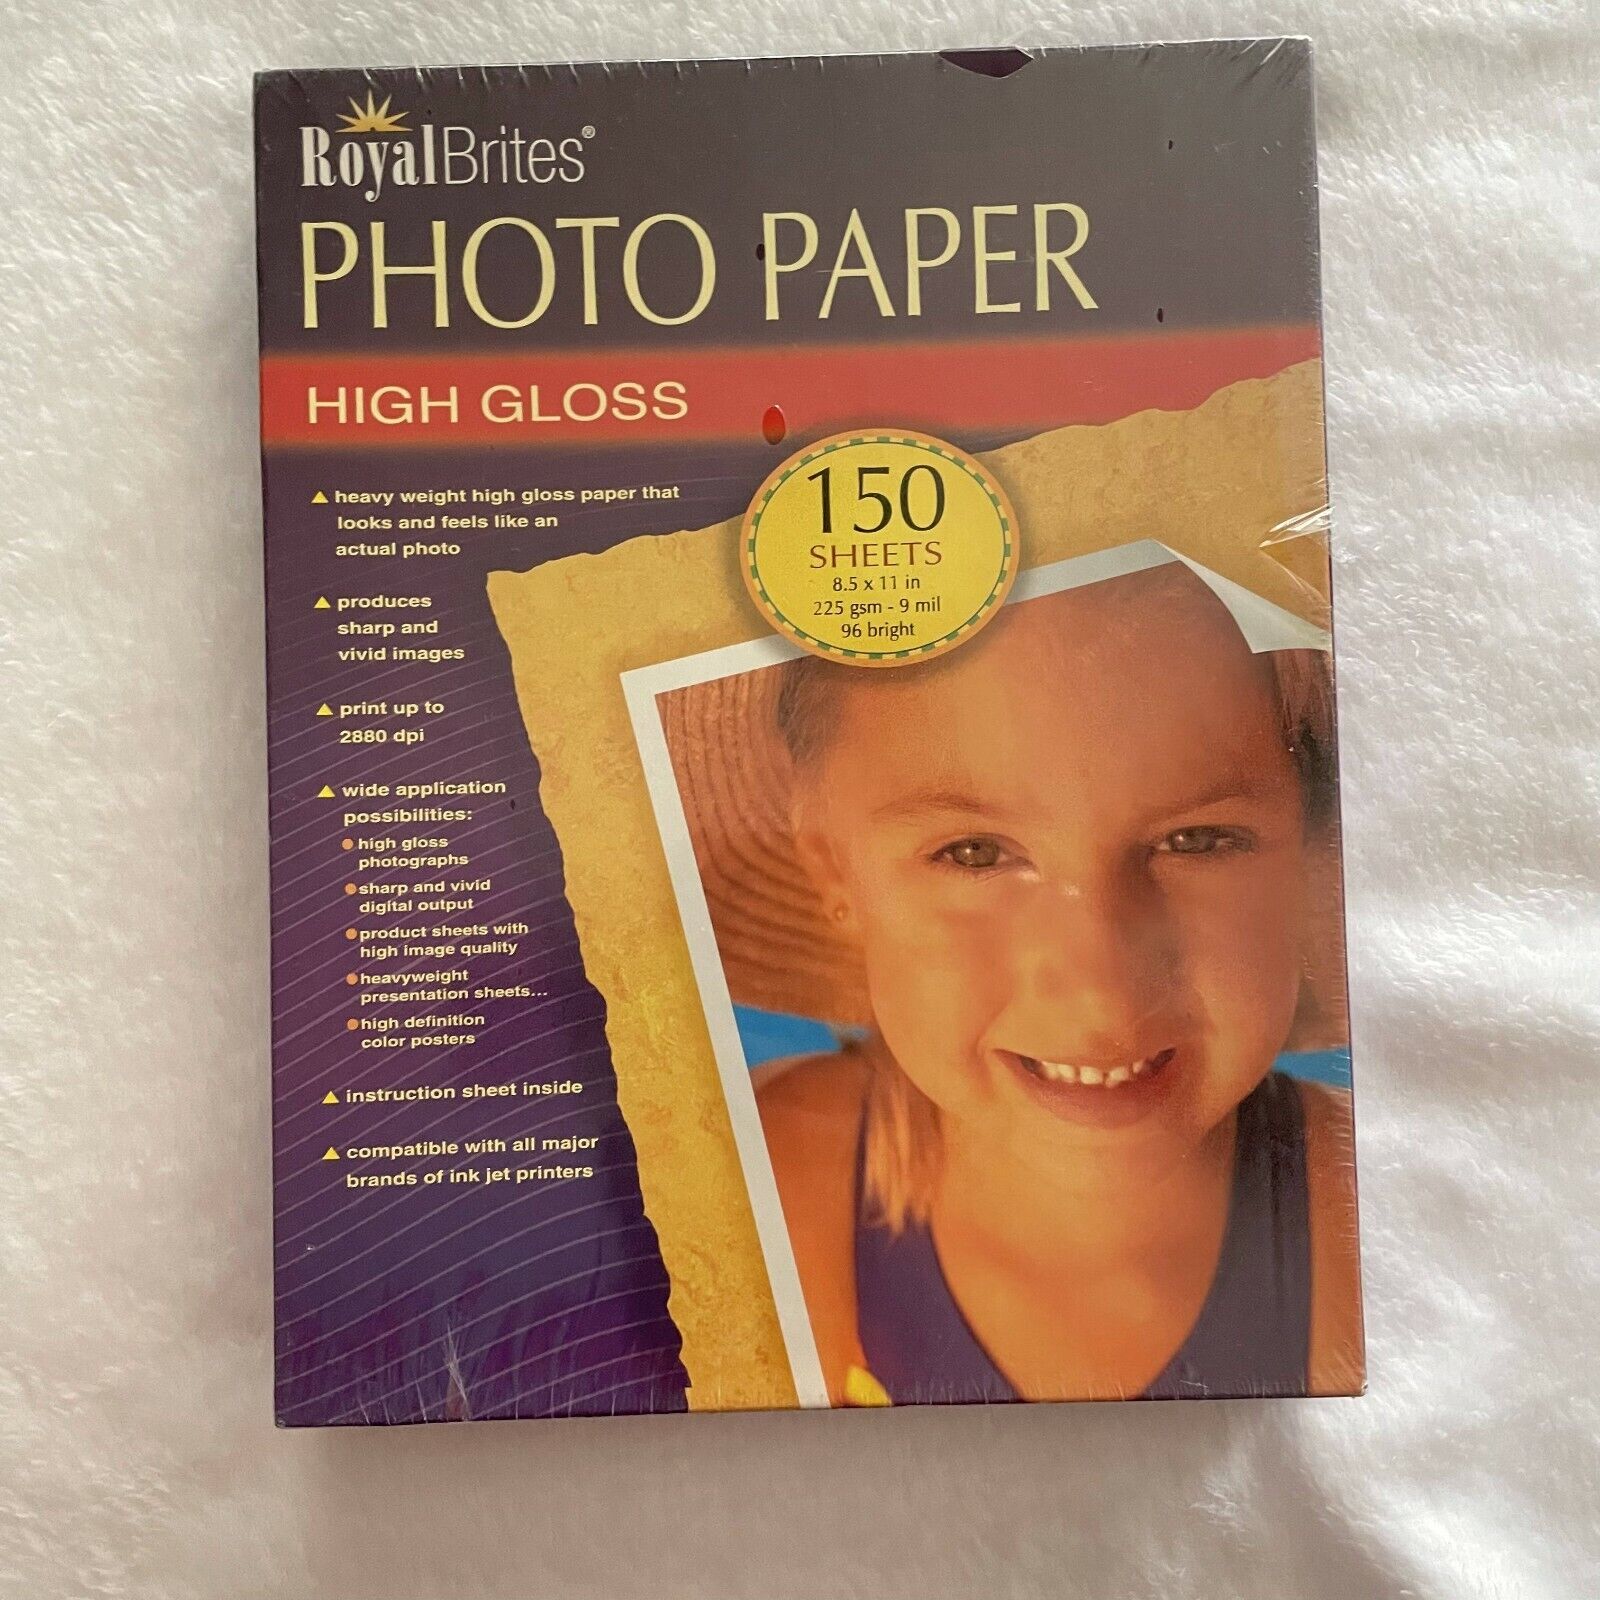 Royal Brites Photo Paper High Gloss 150 Sheets 8.5x11 9mil 96 Bright NIB Sealed